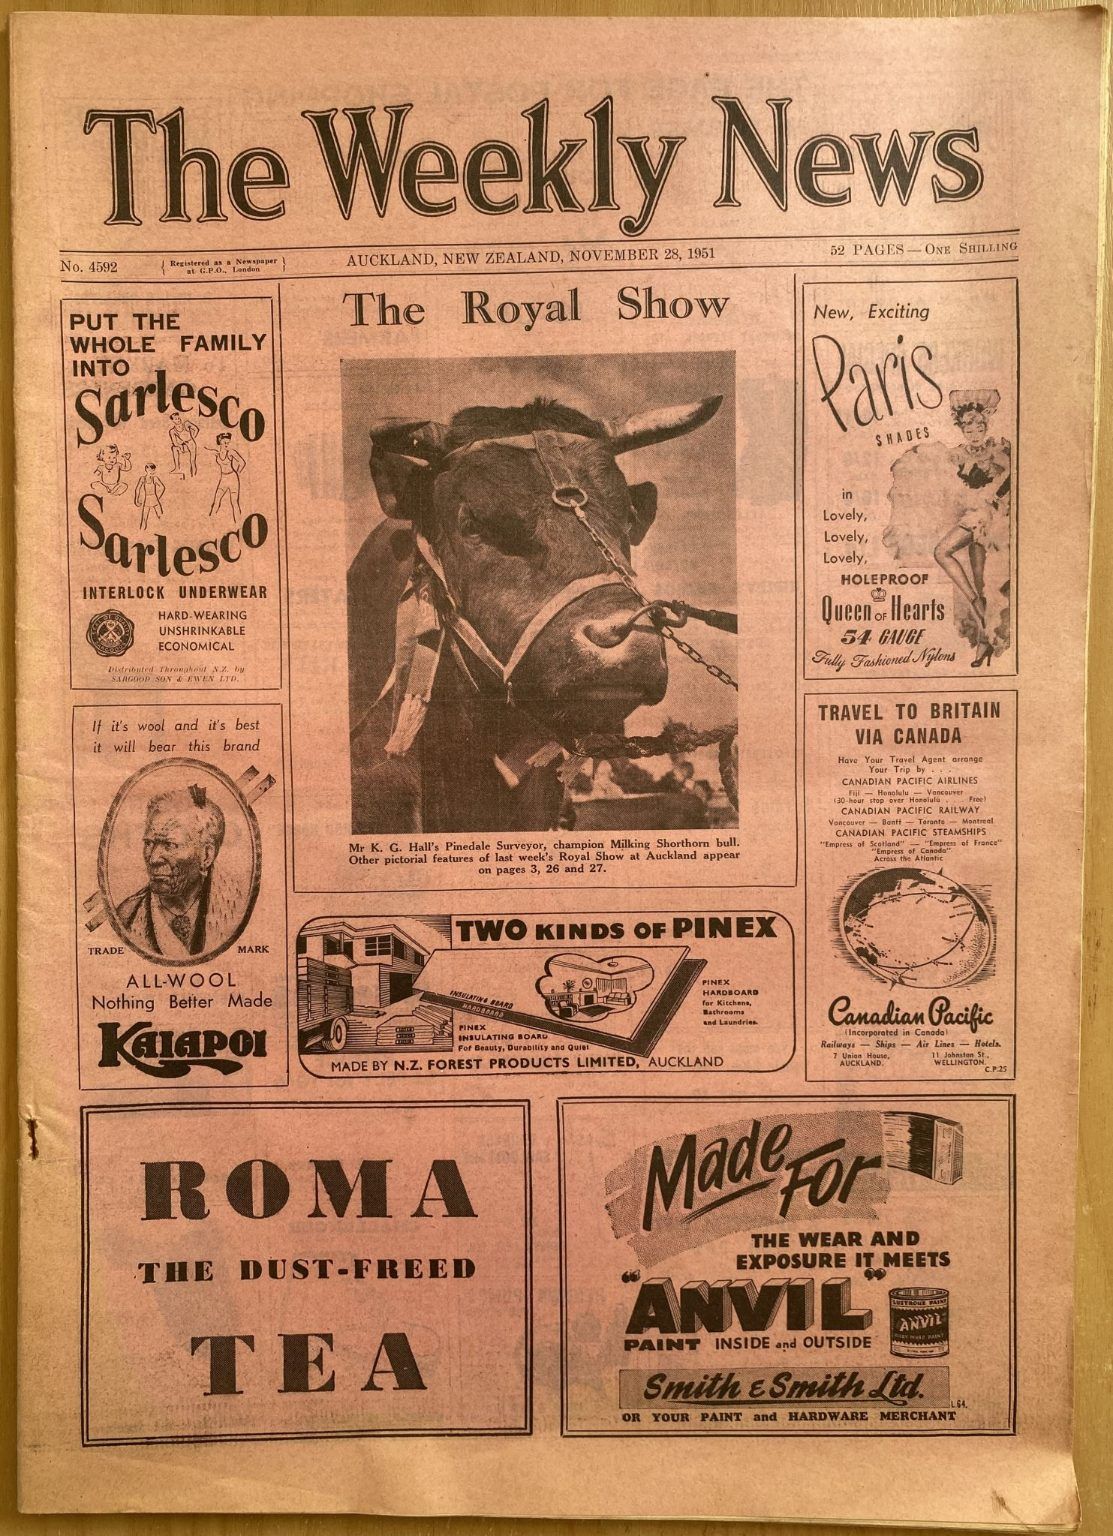 OLD NEWSPAPER: The Weekly News, No. 4592, 28 November 1951